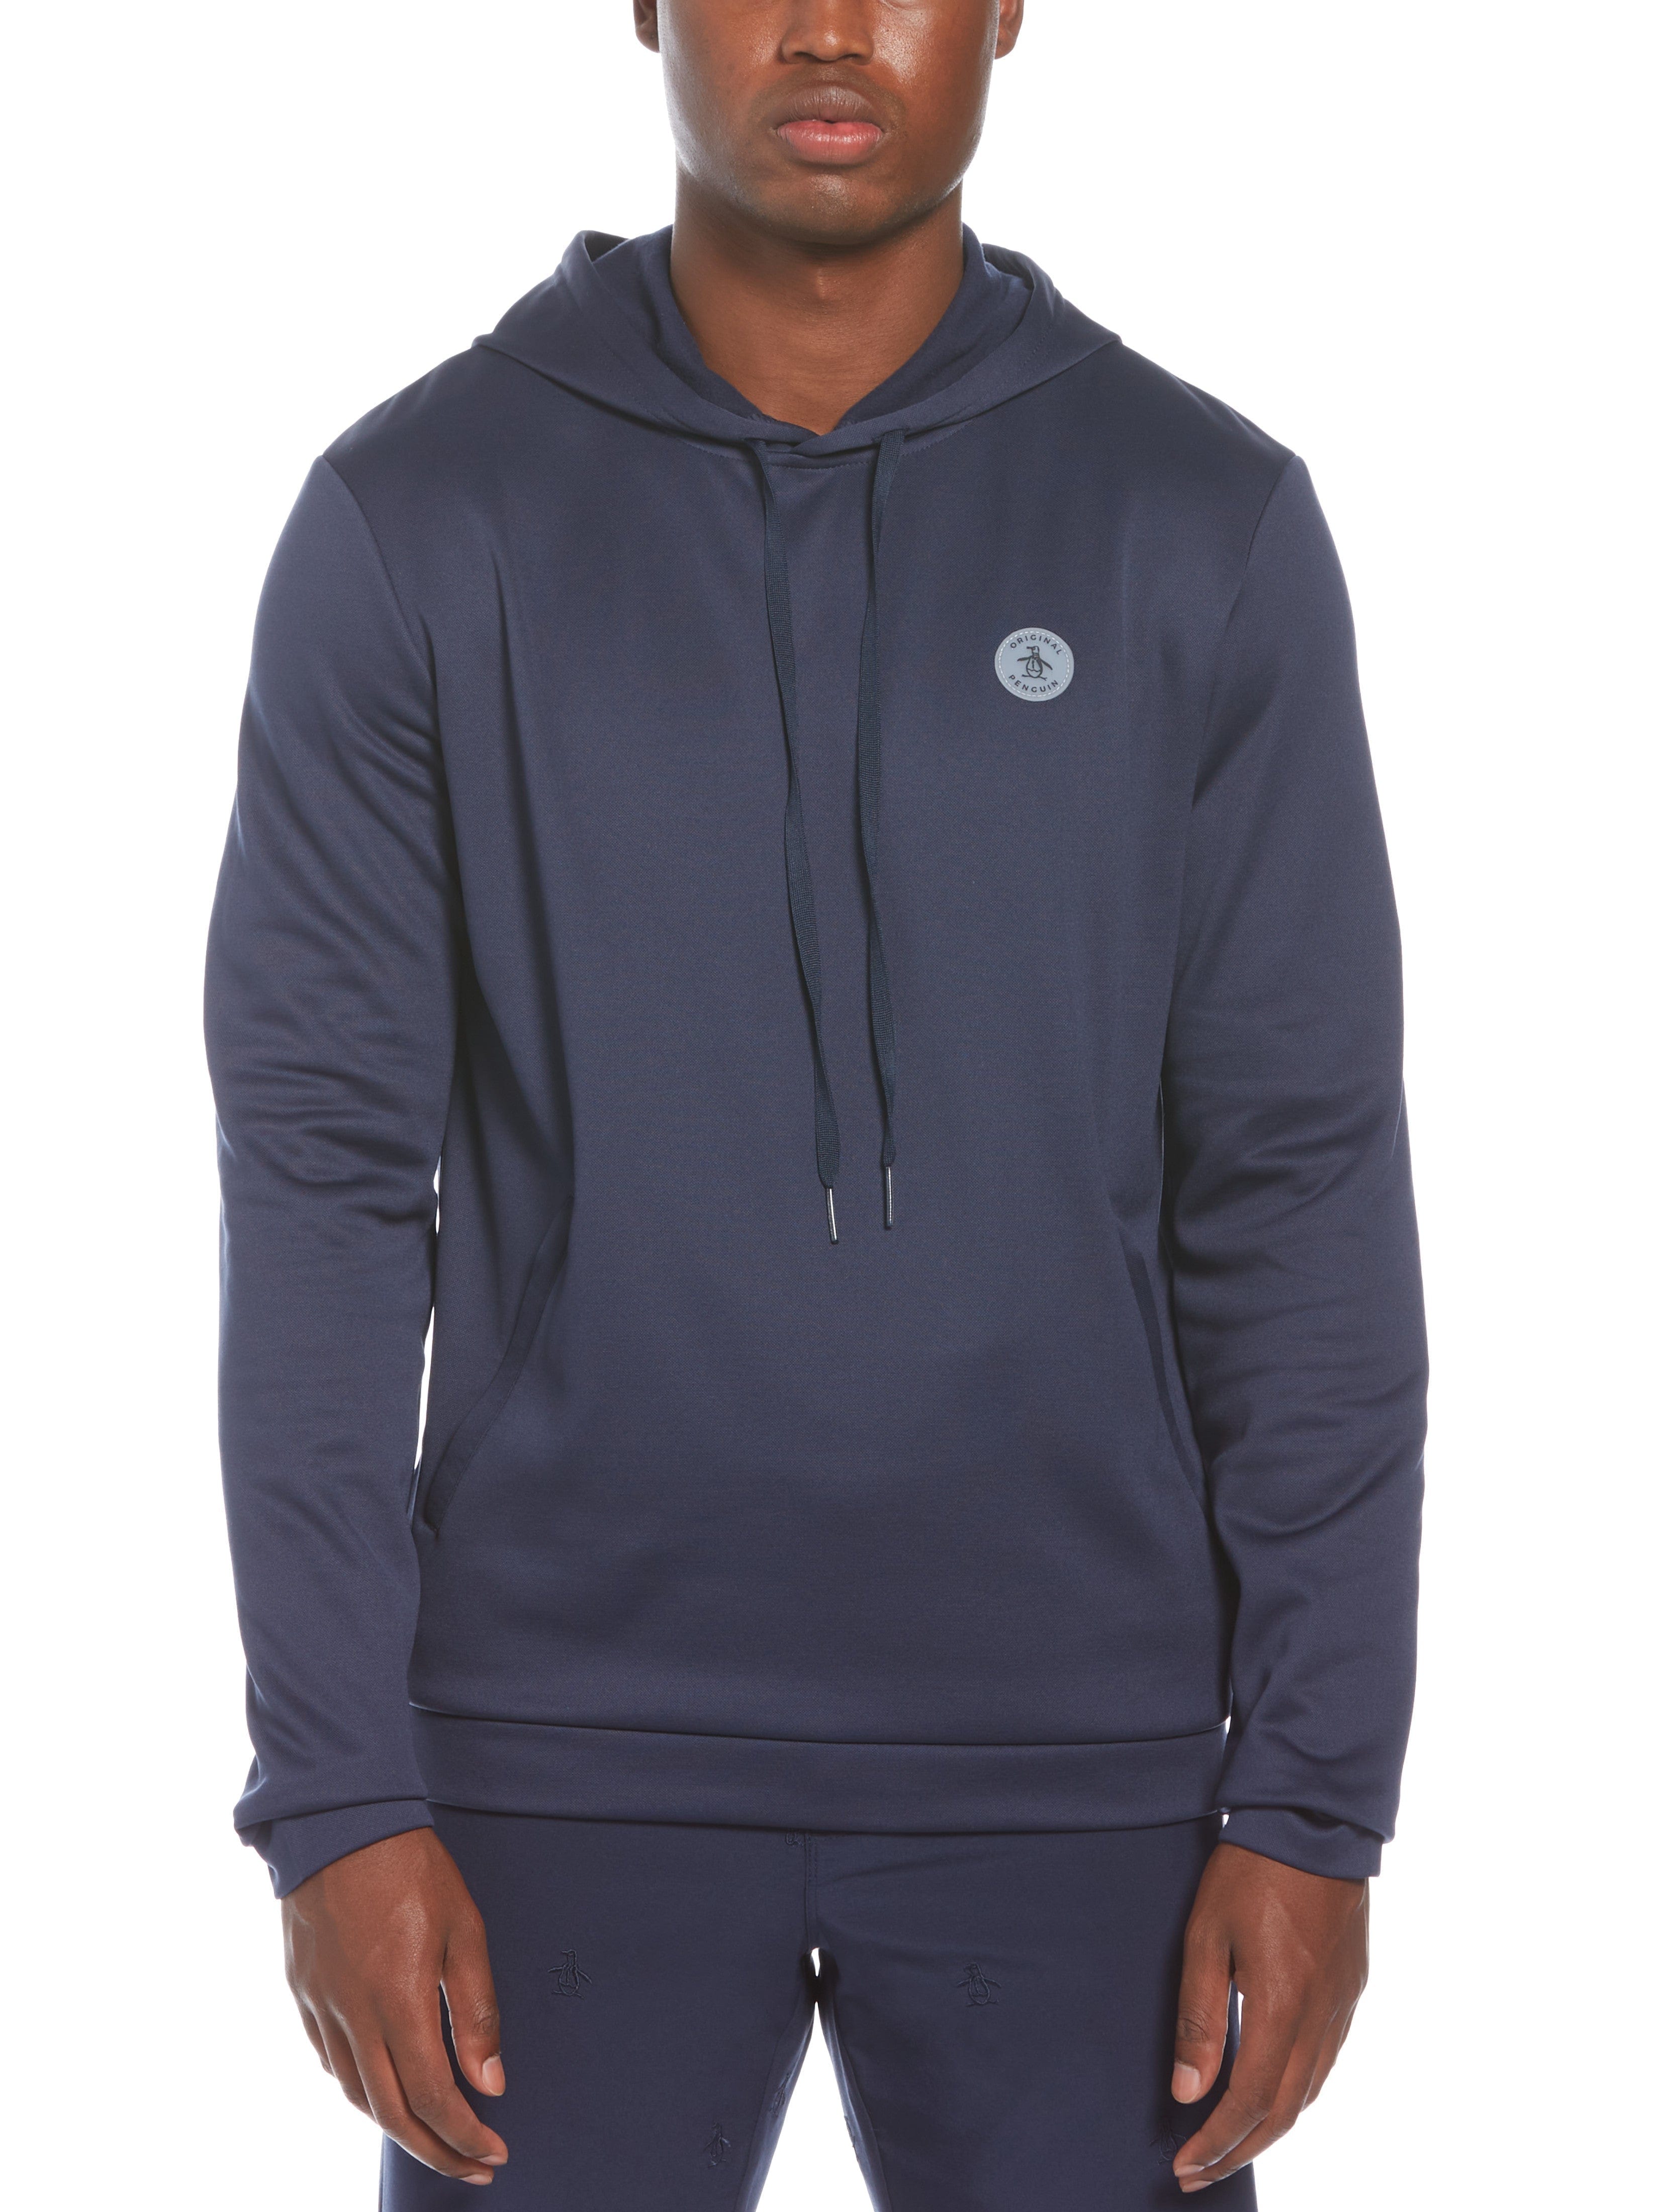 Original Penguin Mens Midweight Layering Golf Hoodie Jacket Top, Size XL, Dark Navy Blue, 100% Polyester | Golf Apparel Shop